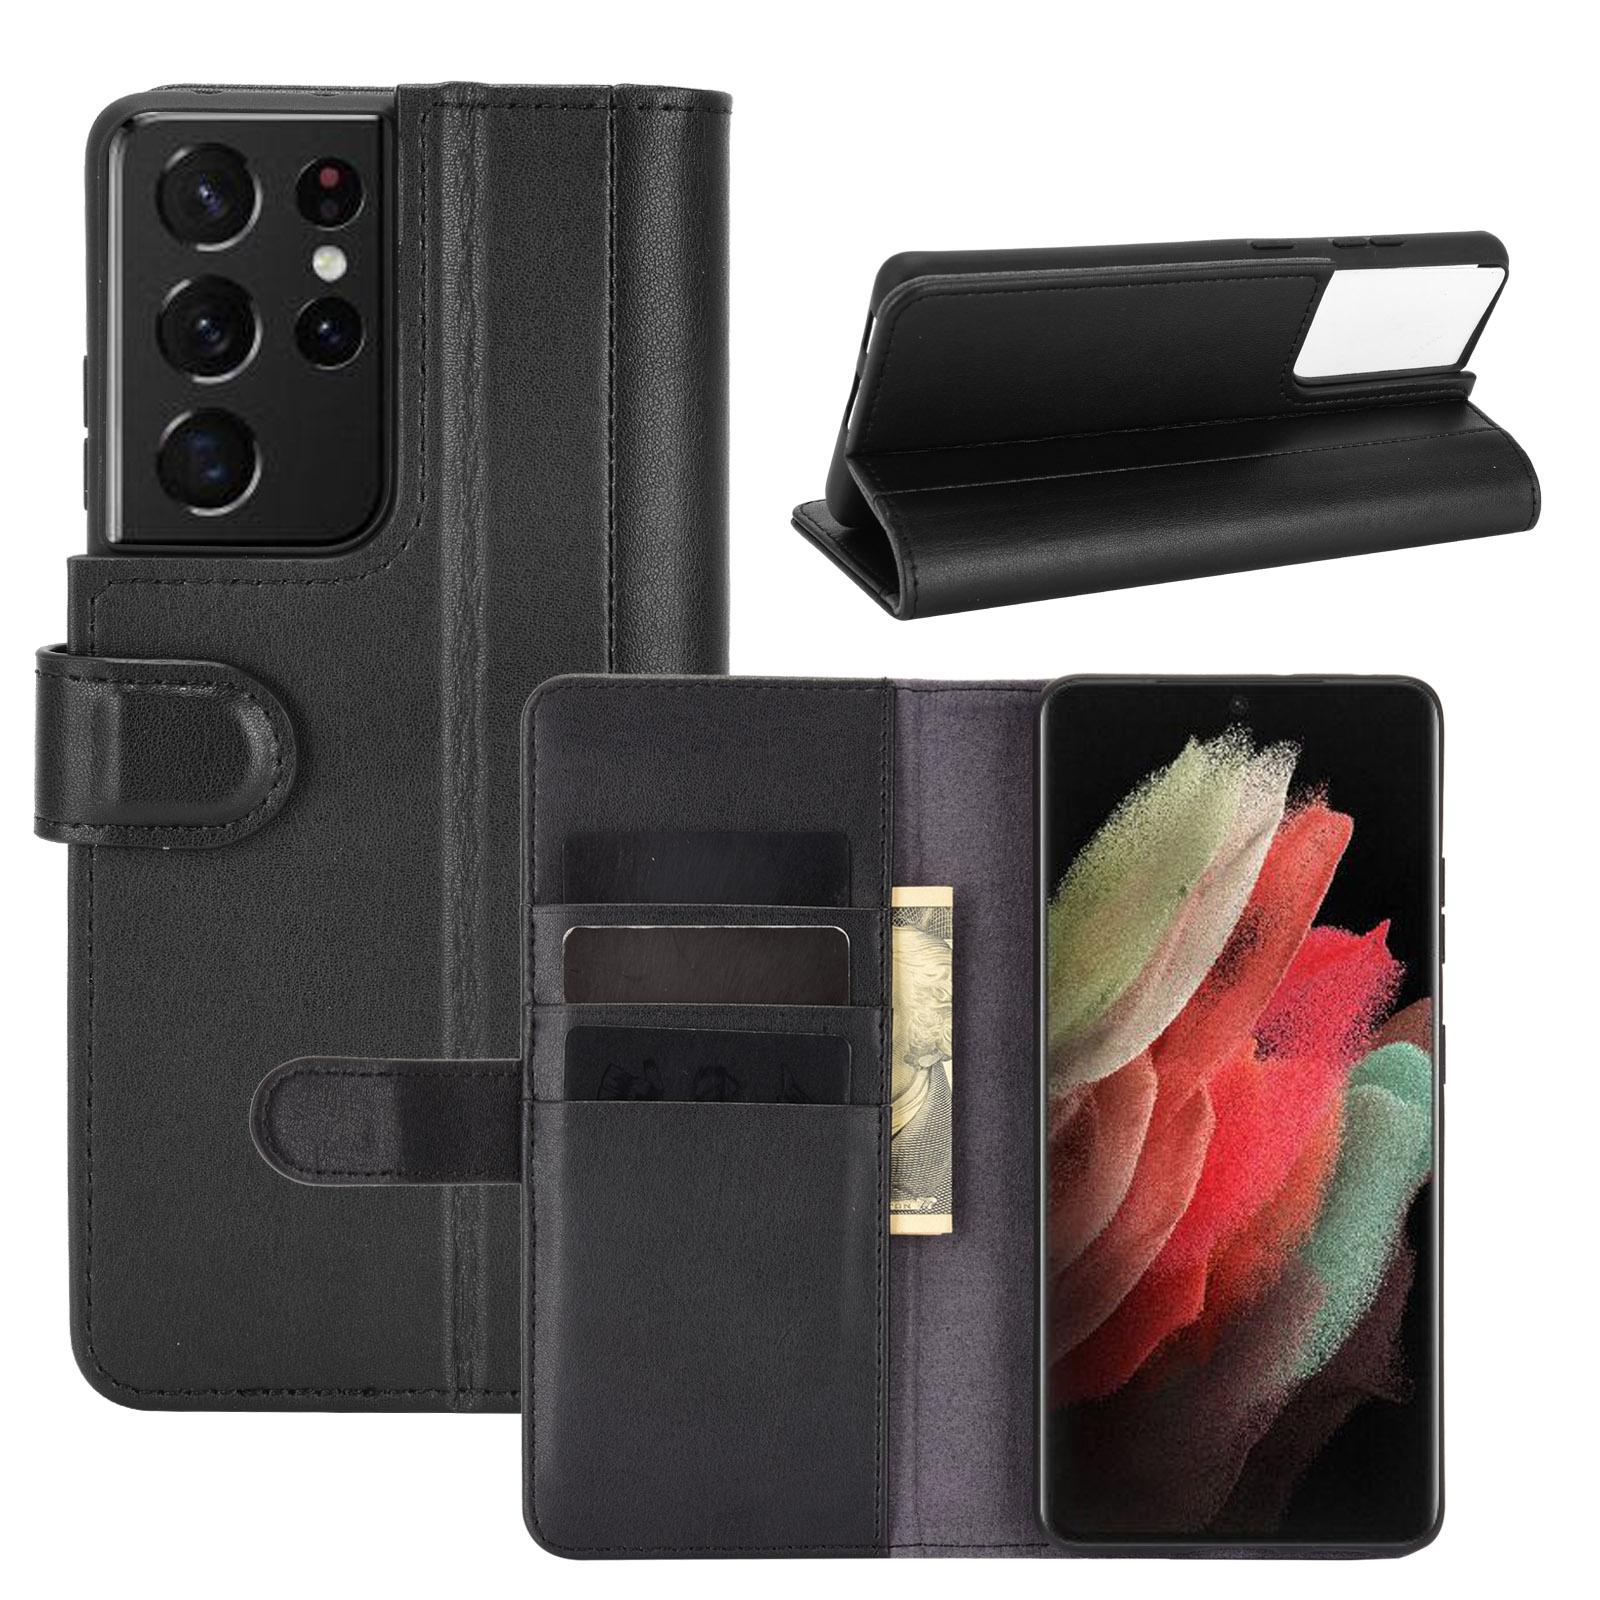 Samsung Galaxy S21 Ultra Plånboksfodral i Äkta Läder, svart